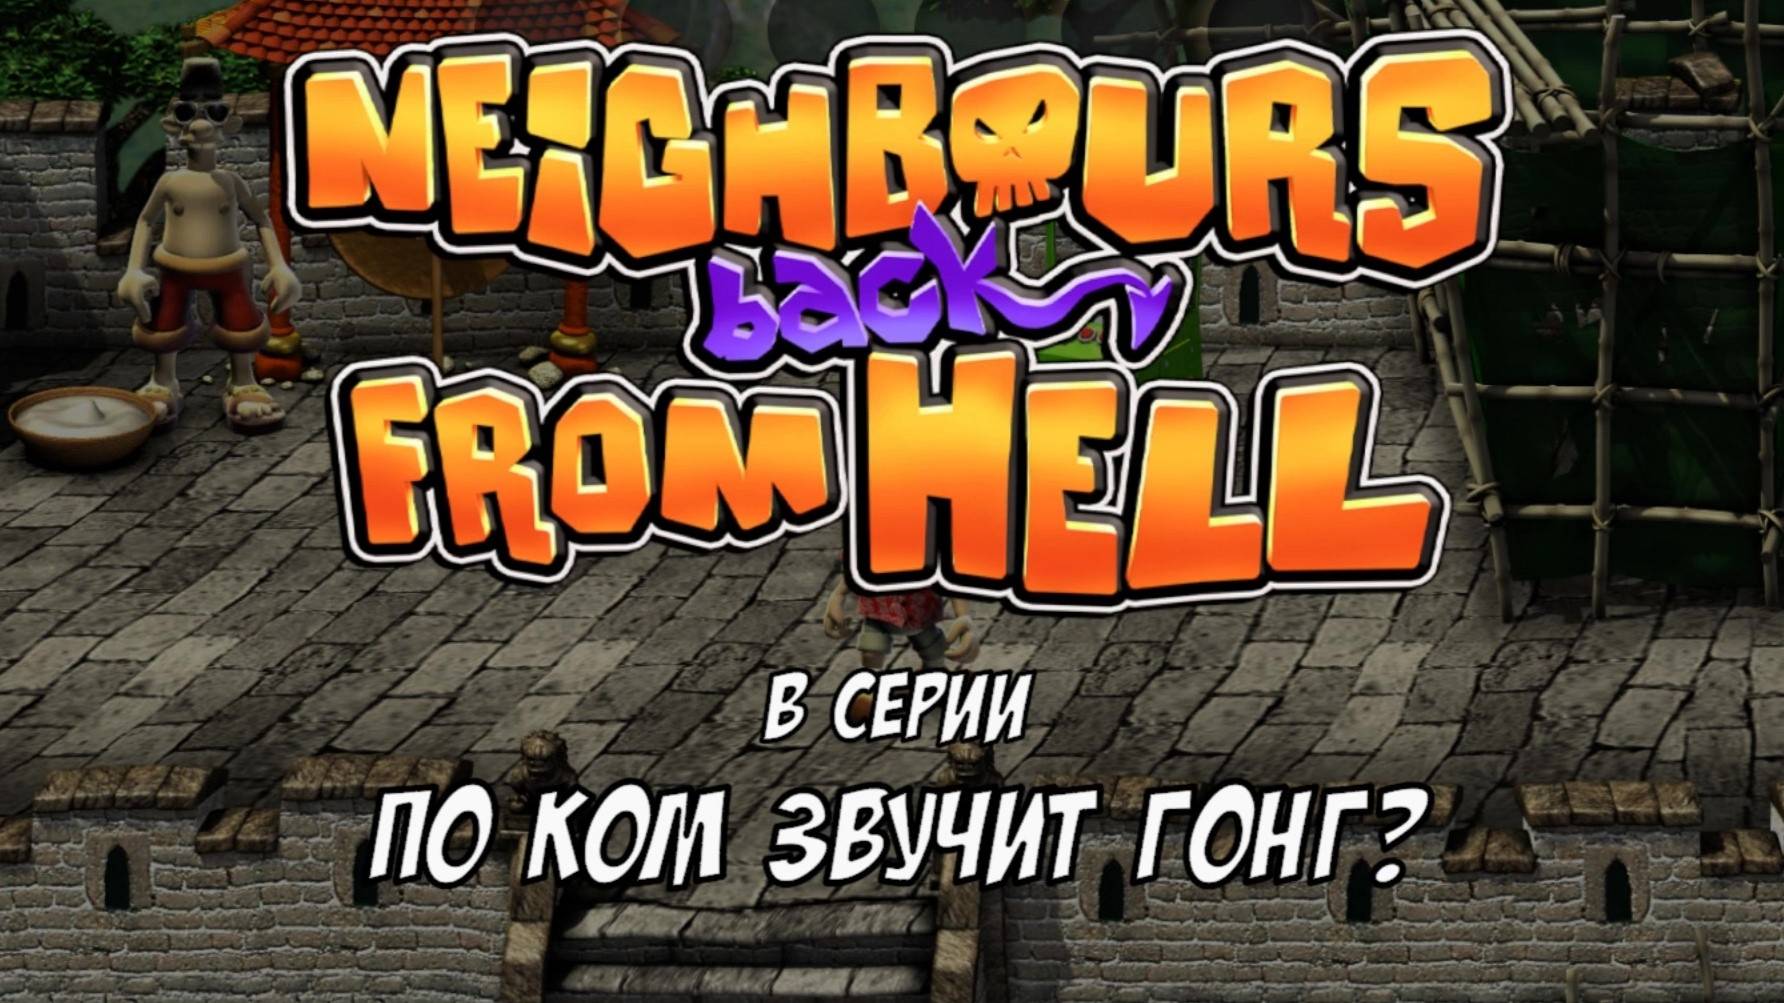 Neighbours Back From Hell (2020) PC | Как достать скуфа | 18 По ком звучит гонг?